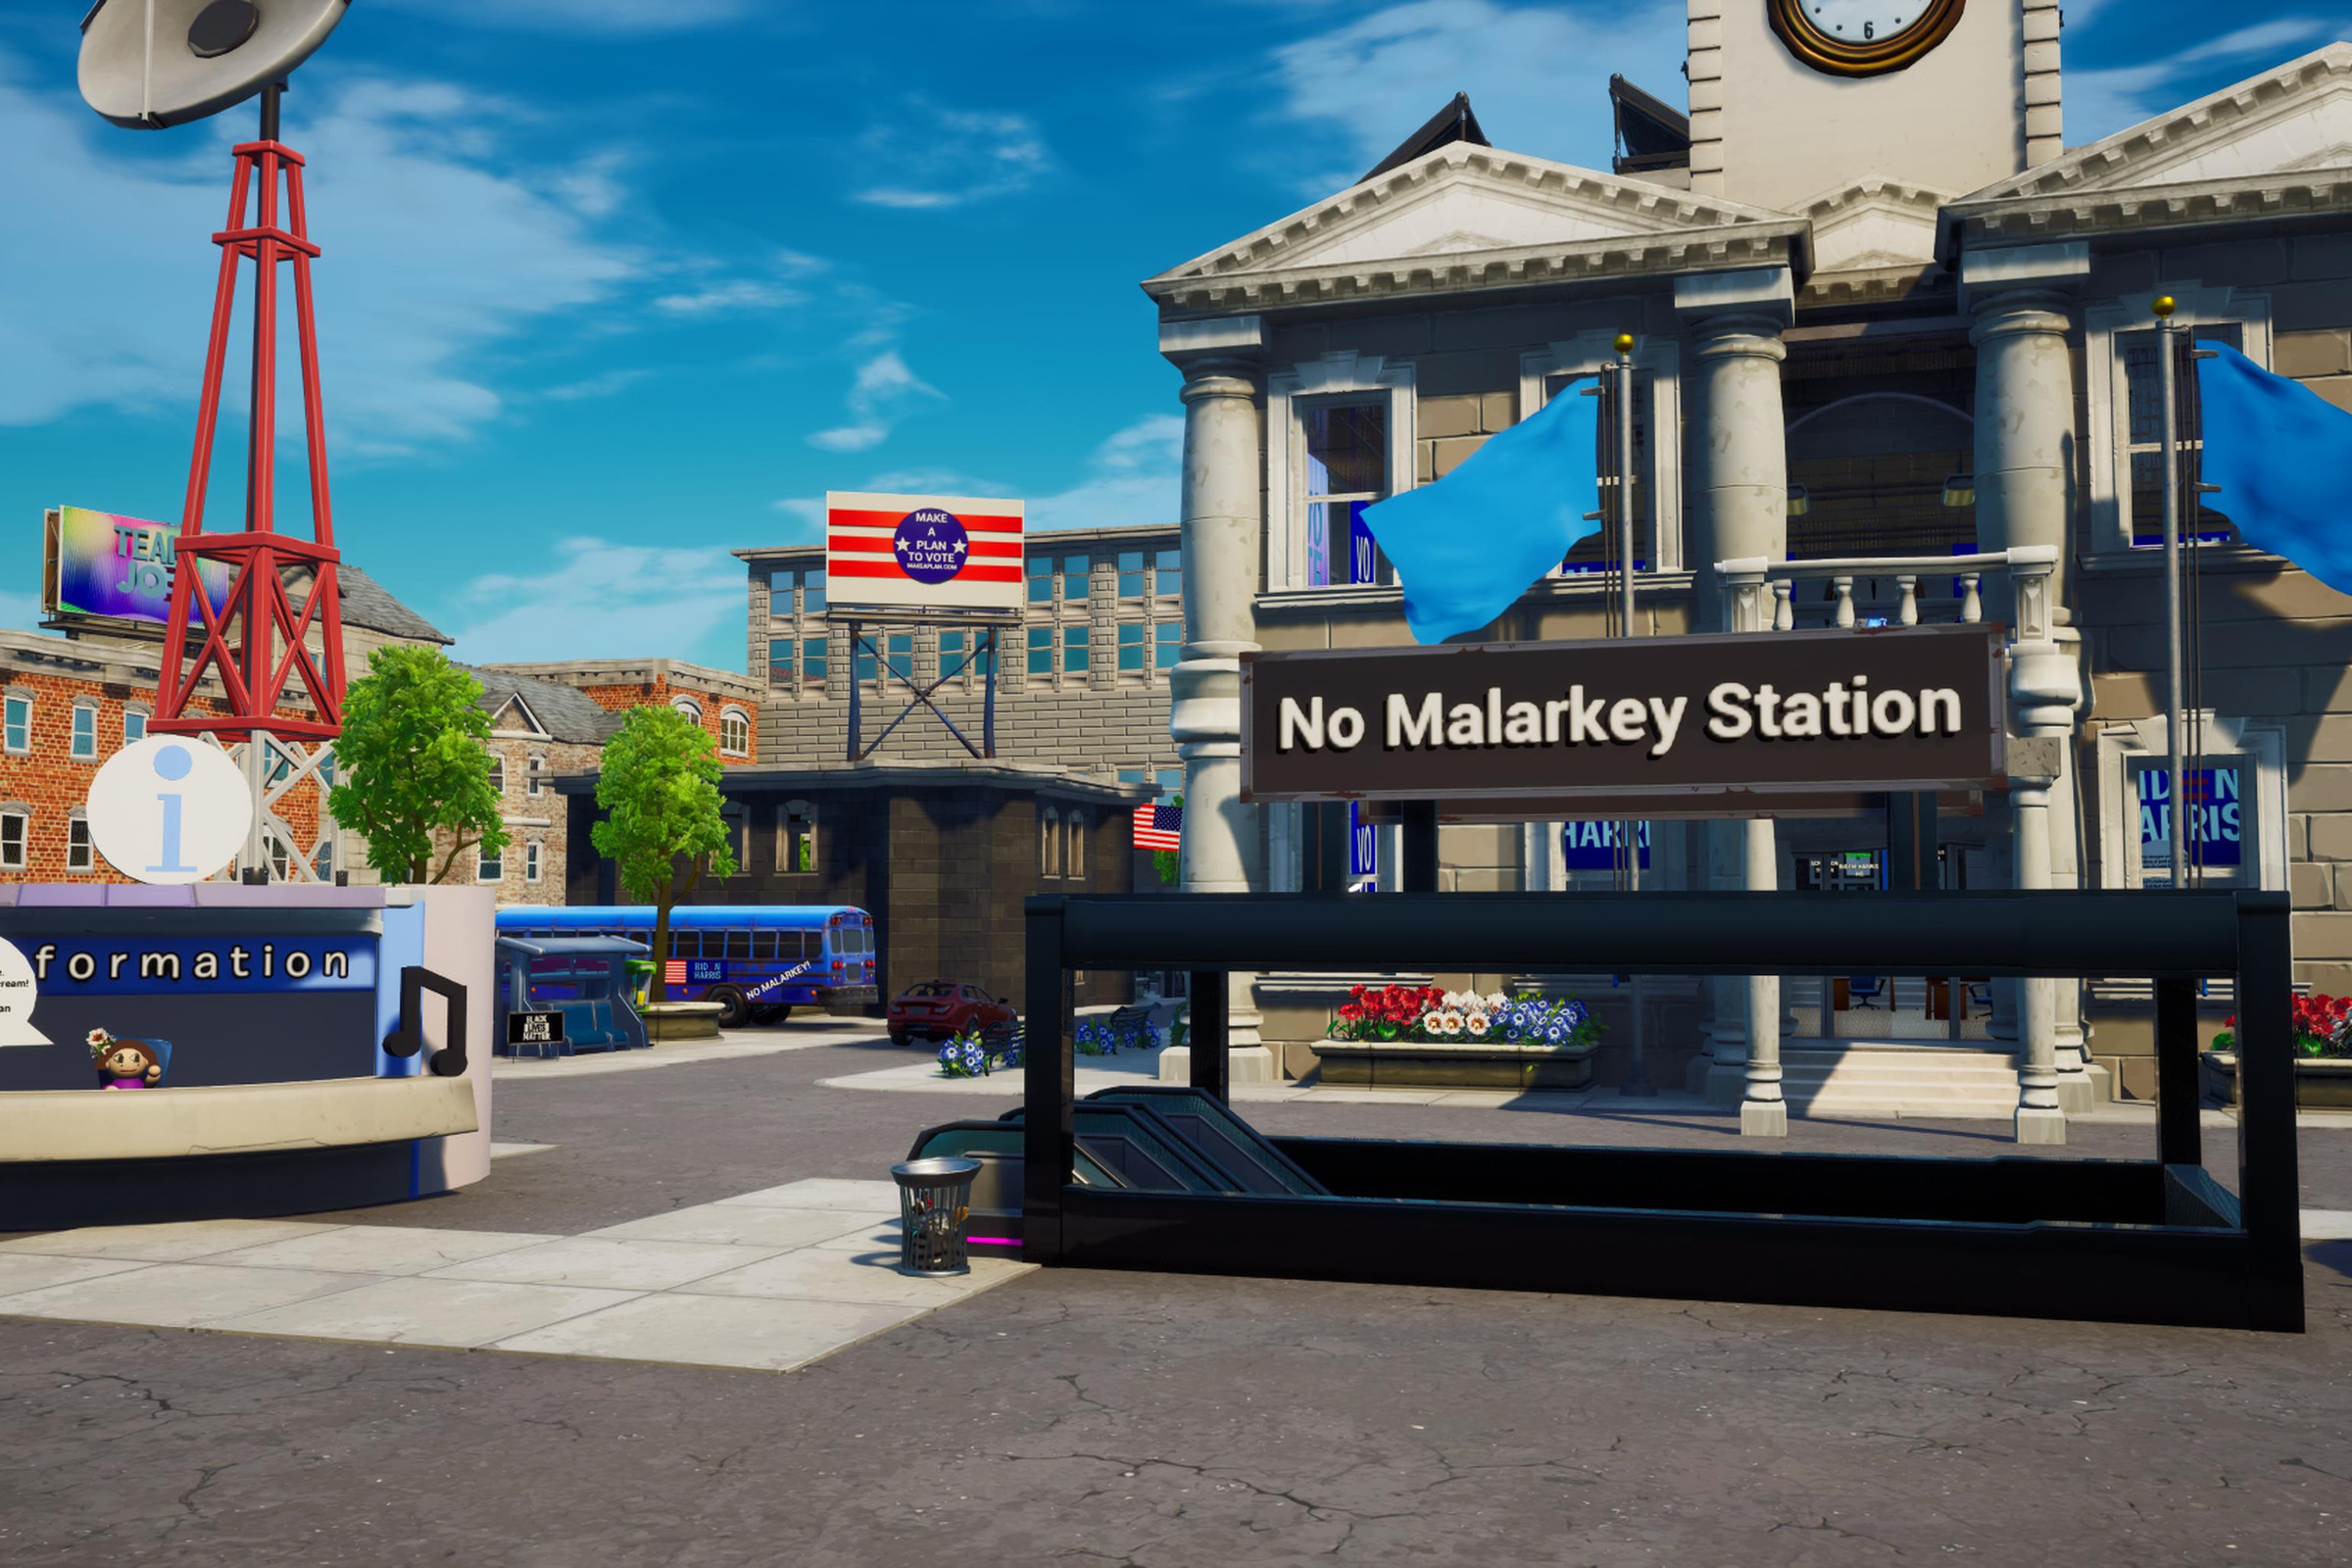 No Malarkey Station appears in the Biden-Harris campaign’s new Fortnite map